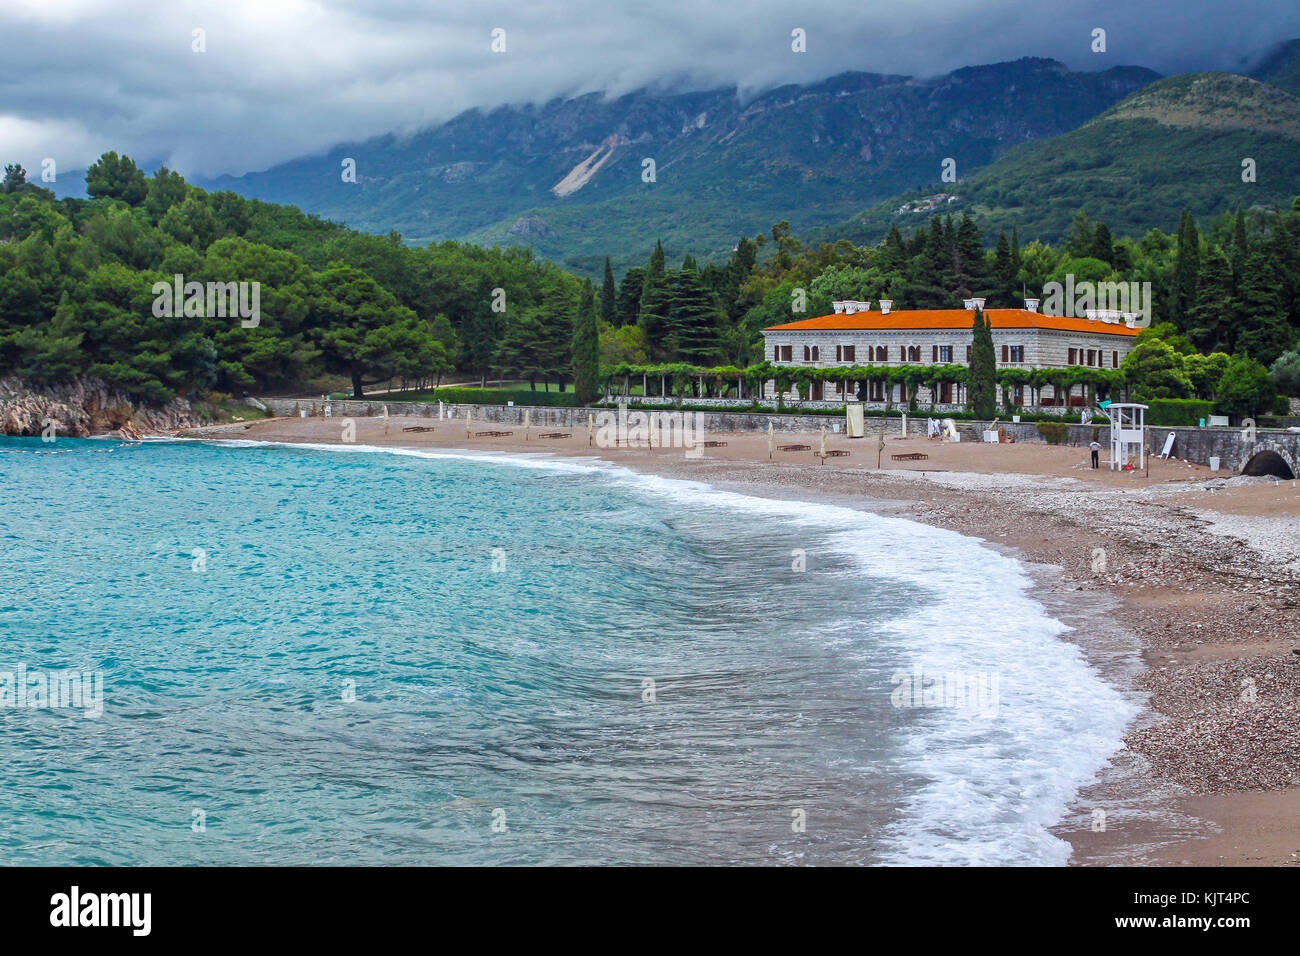 Picturesque summer view of Adriatic seacoast in Budva Riviera. Milocer beach (Milocer plaza) on the foreground. Sveti Stefan, Montenegro Stock Photo